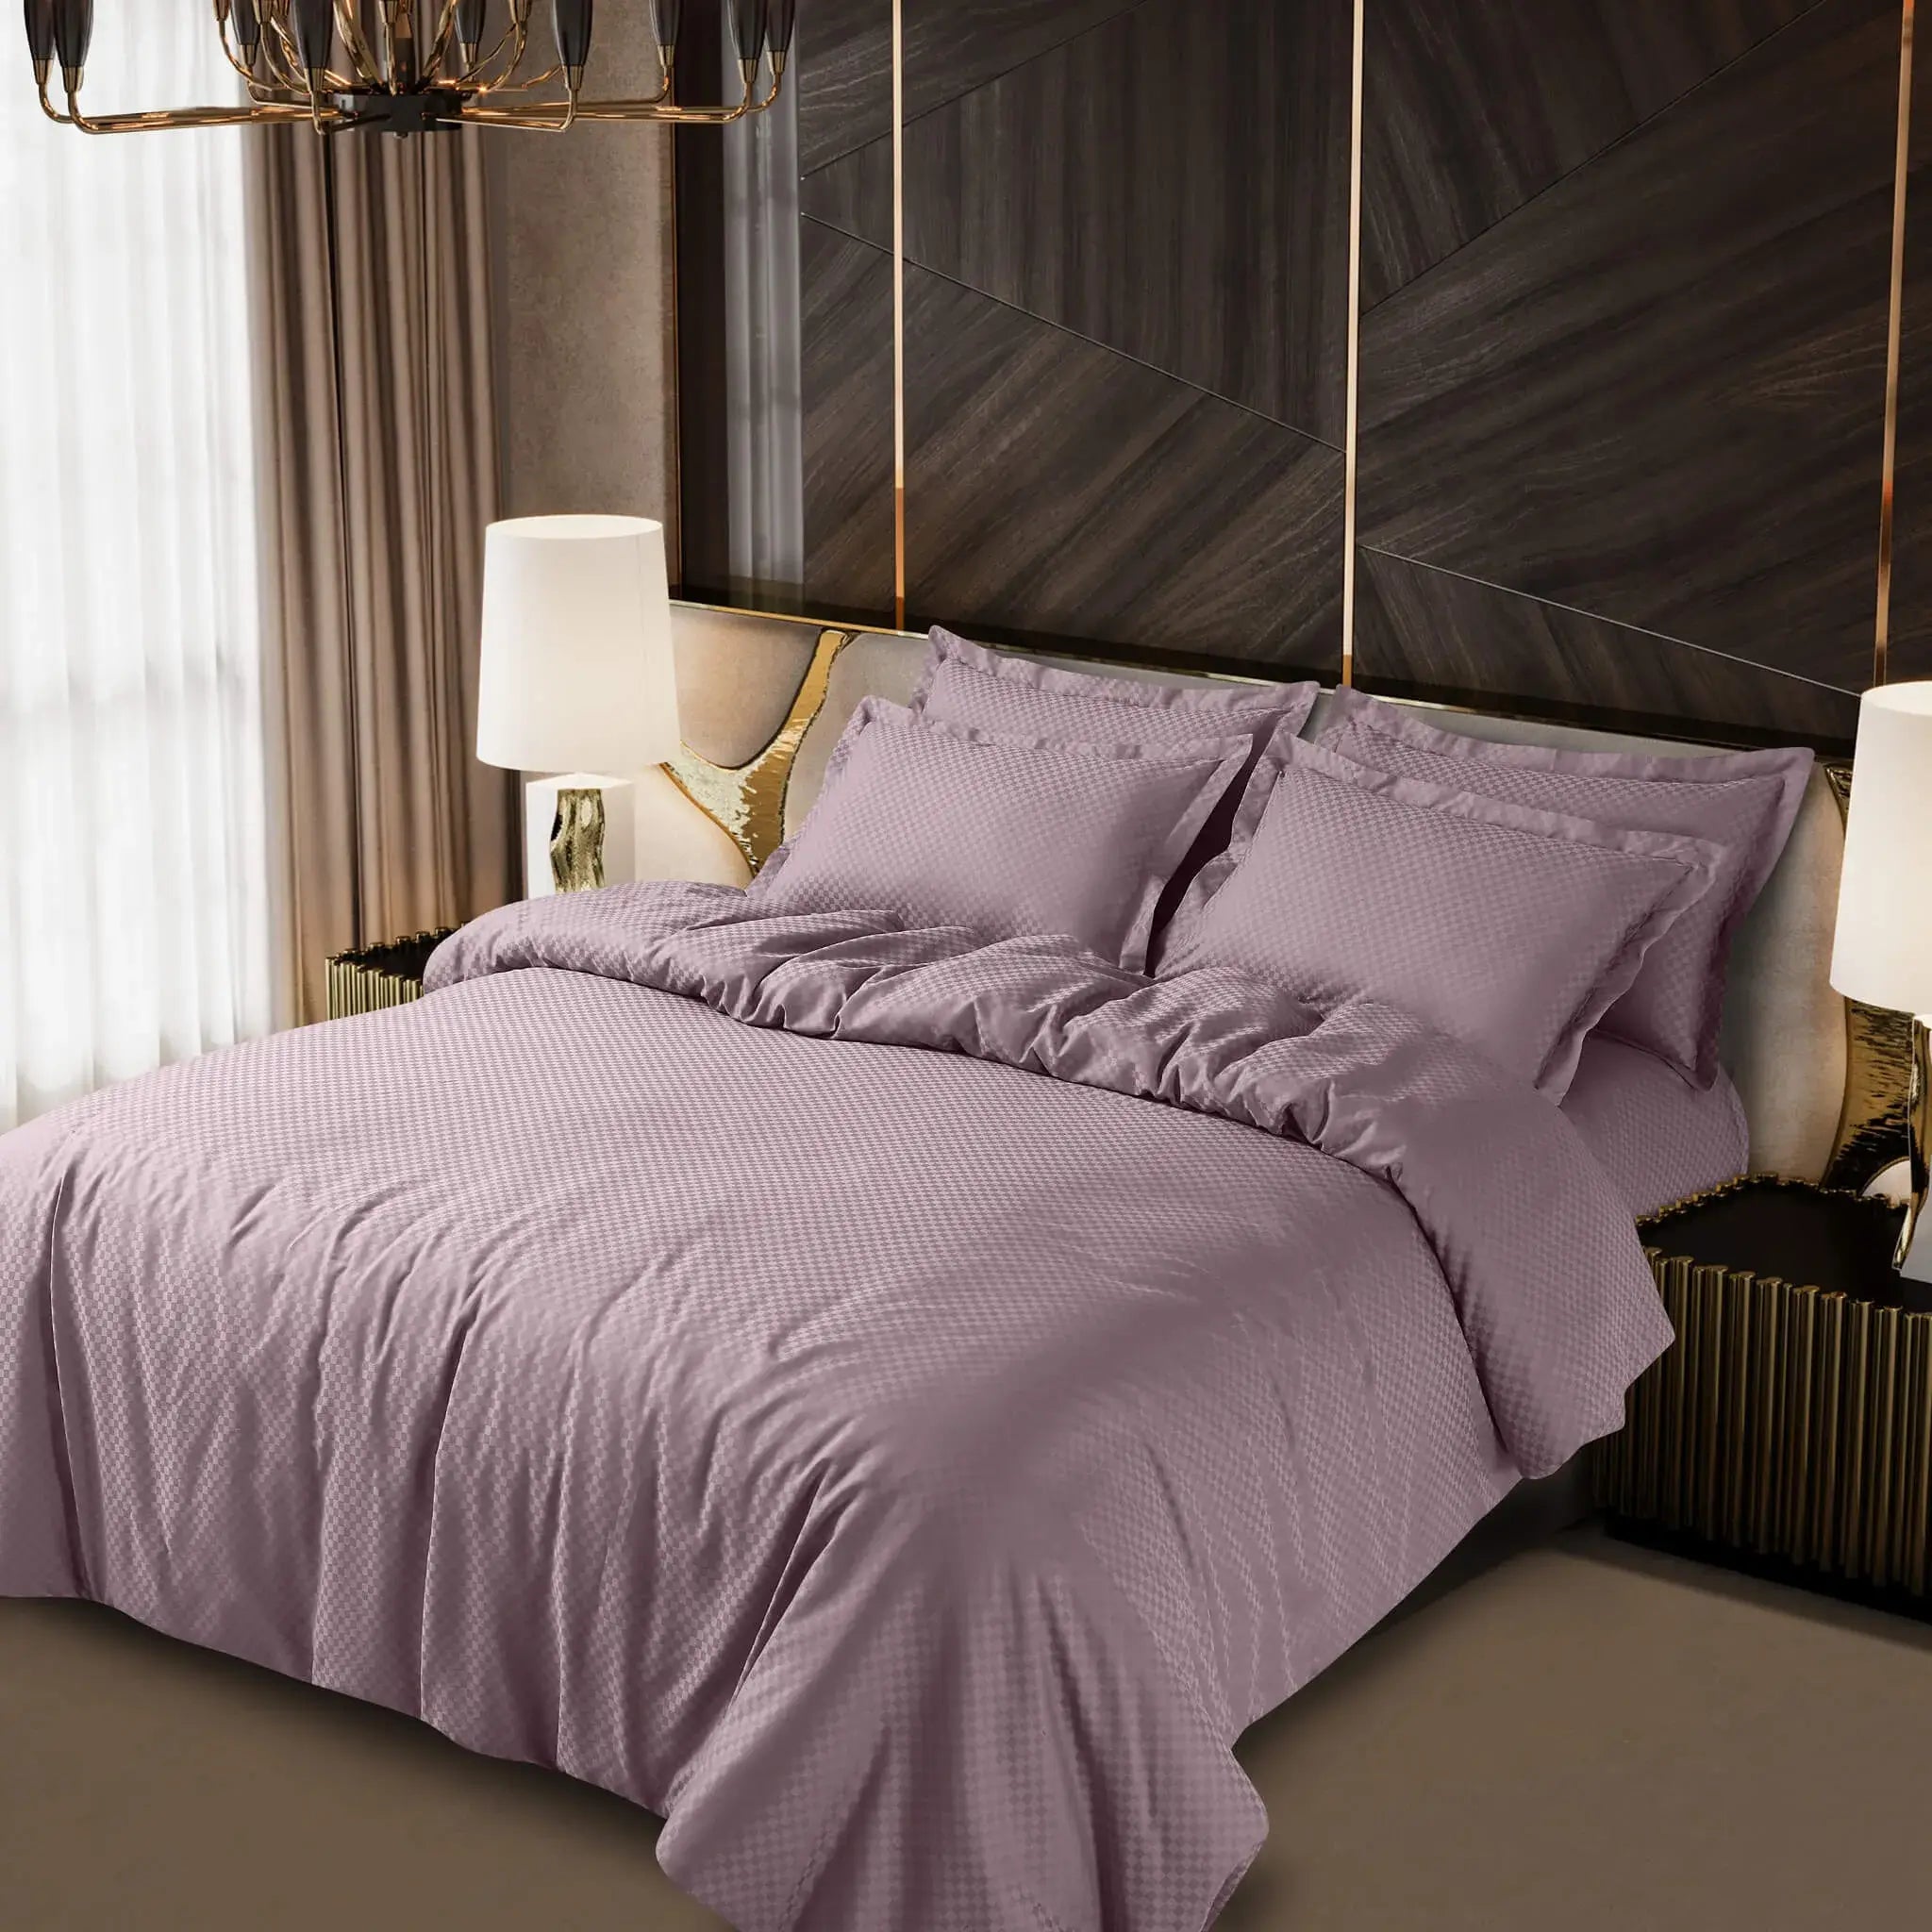 Malako Lyon Jacquard Checks 450 TC 100% Cotton King Size Bed Sheets & Duvet Covers